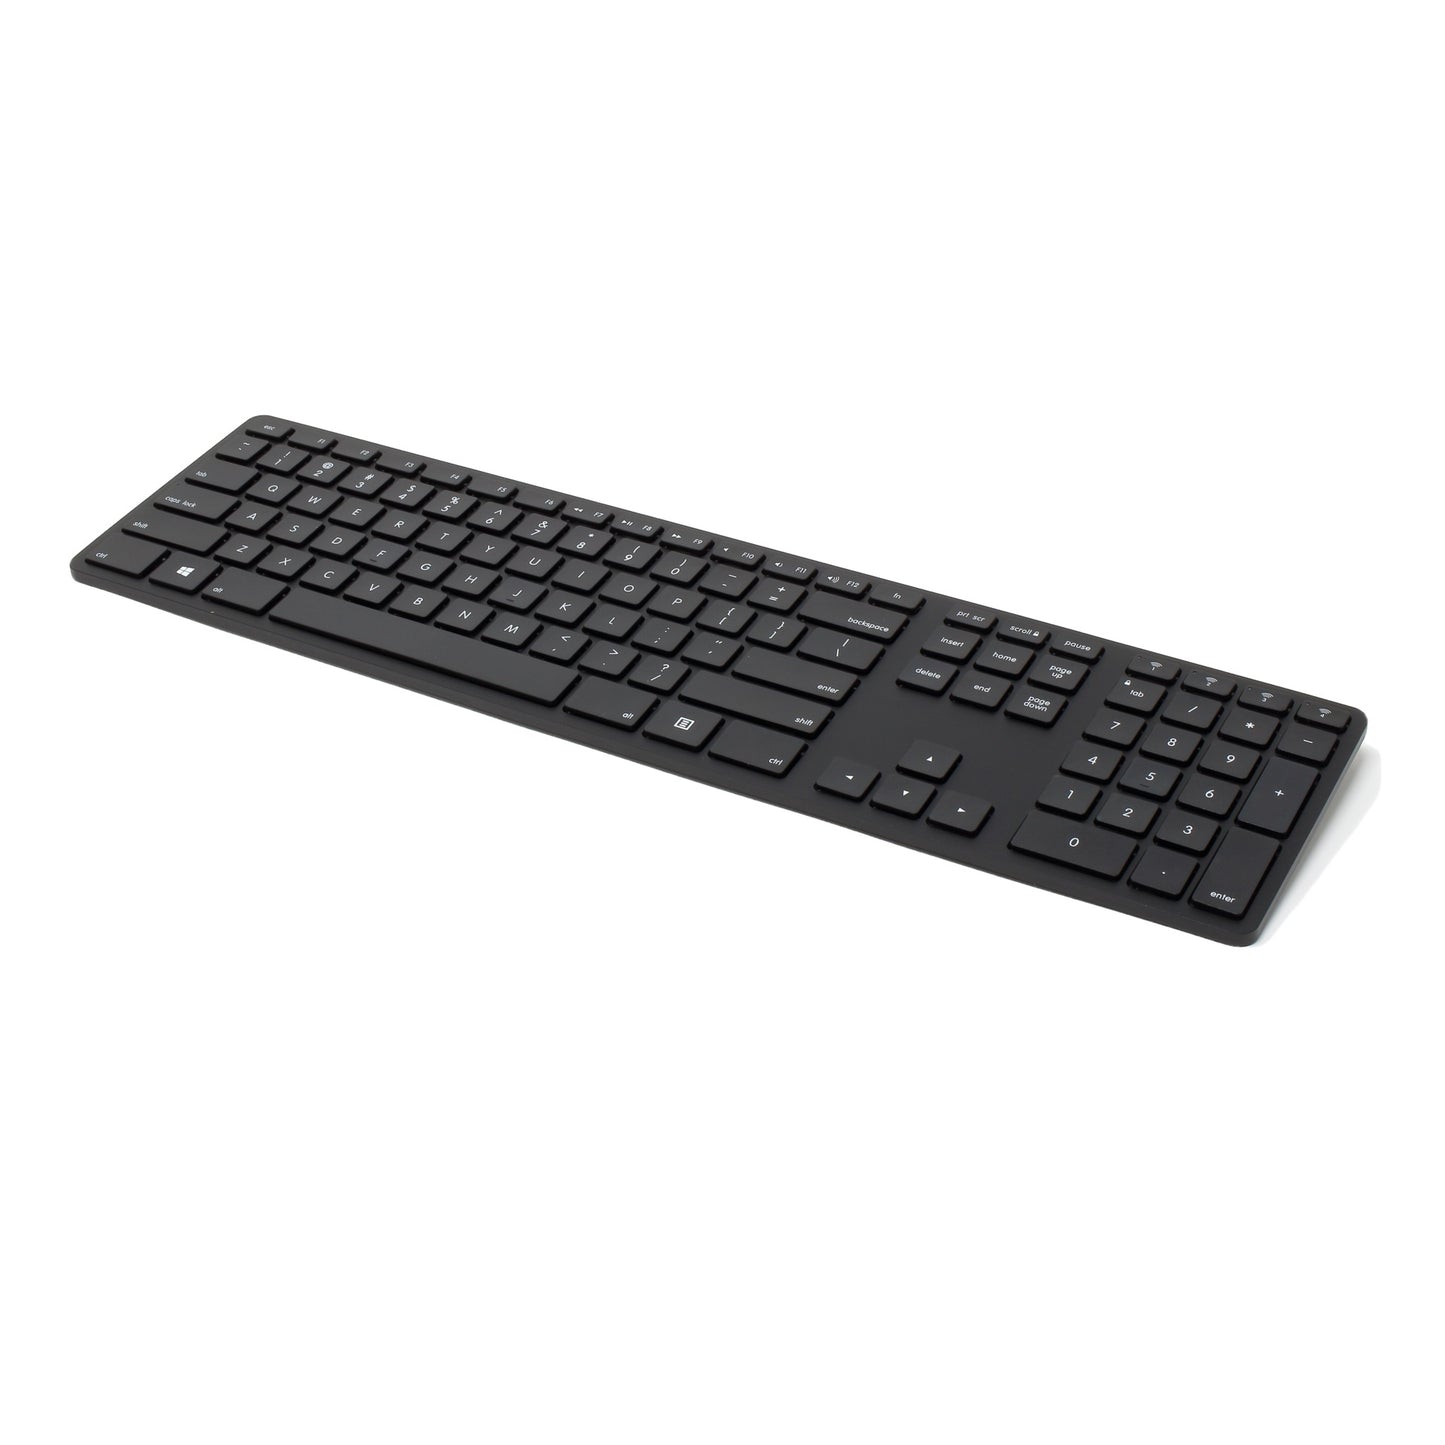 Wireless USB-C Aluminum Keyboard for PC - Black